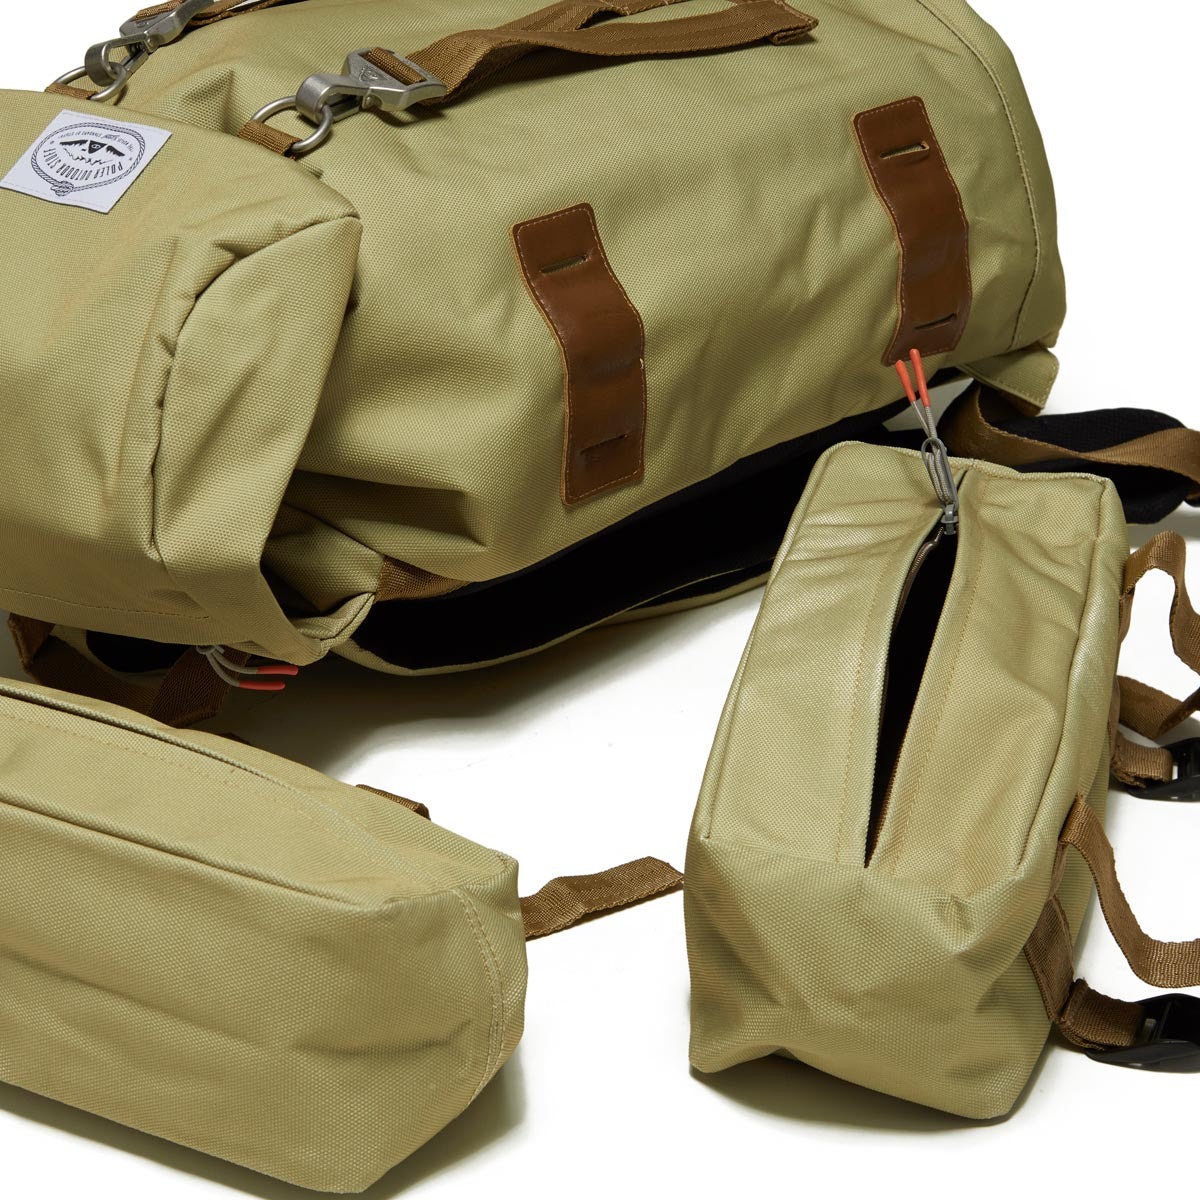 Poler Classic Rucksack Backpack - Khaki image 3